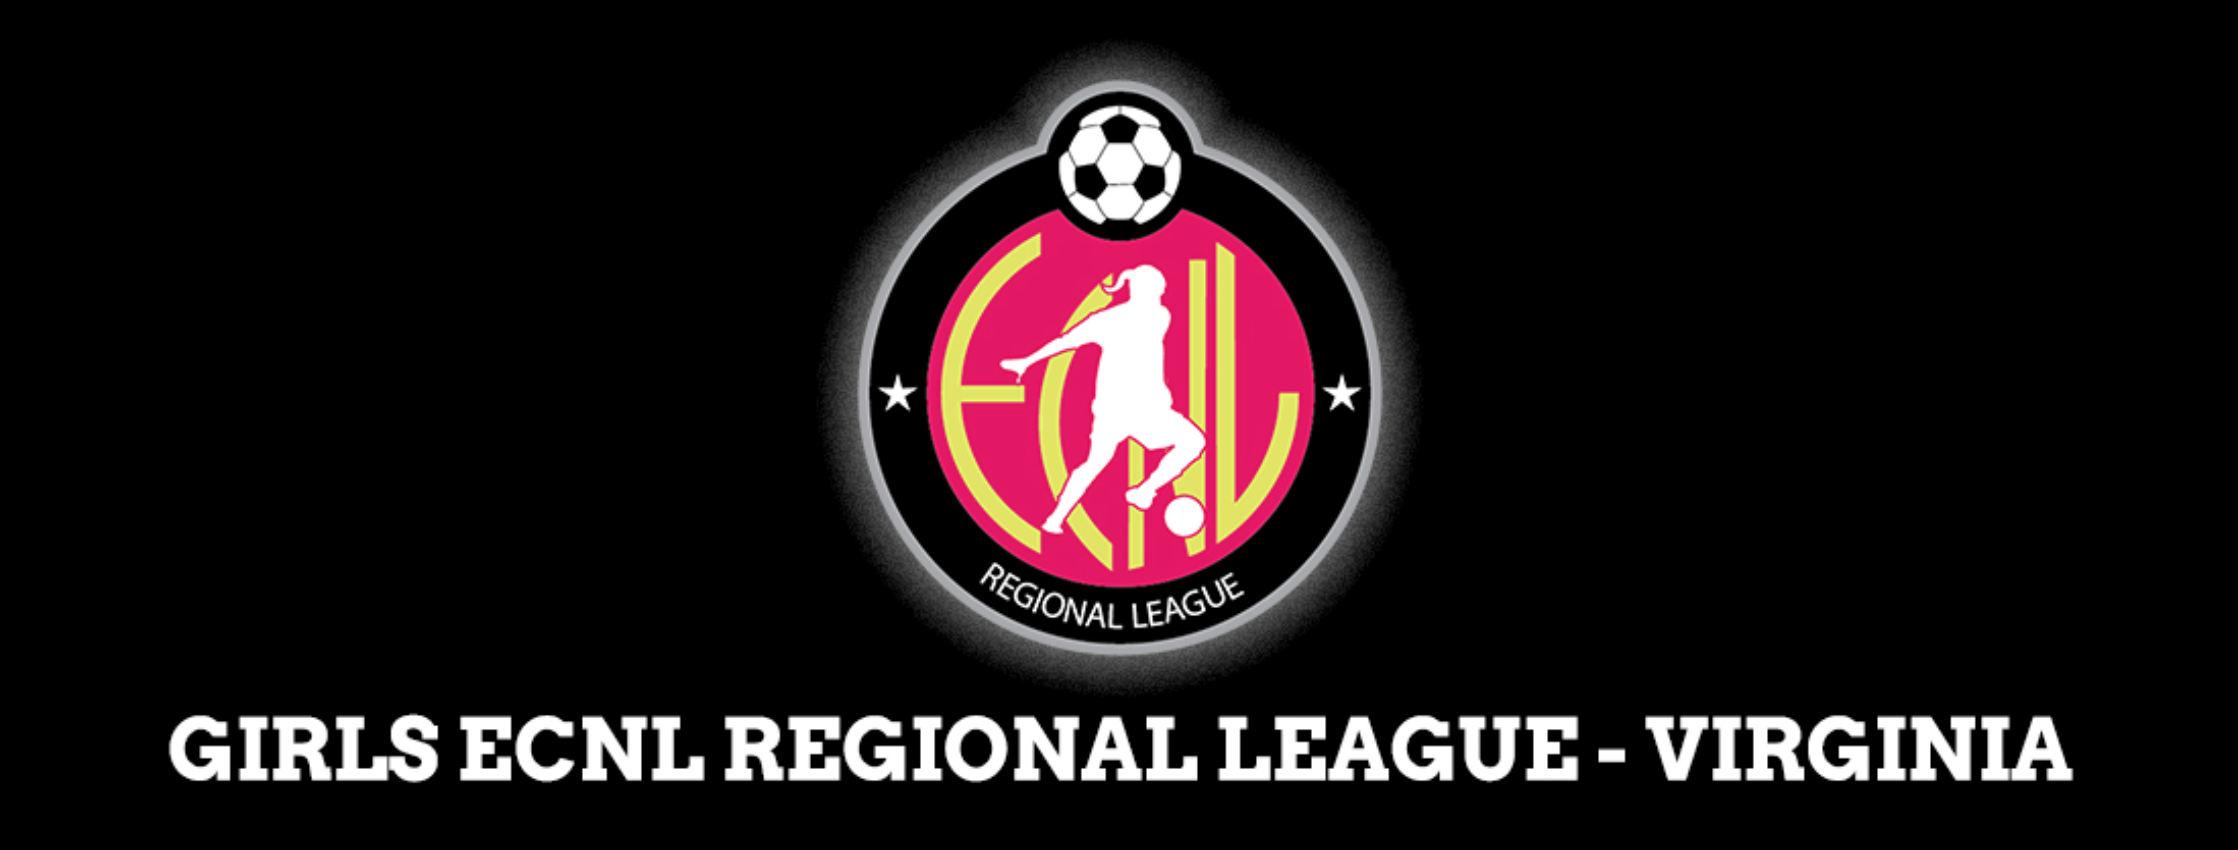 Former Virginia Premier League to Become Newest ECNL Regional League